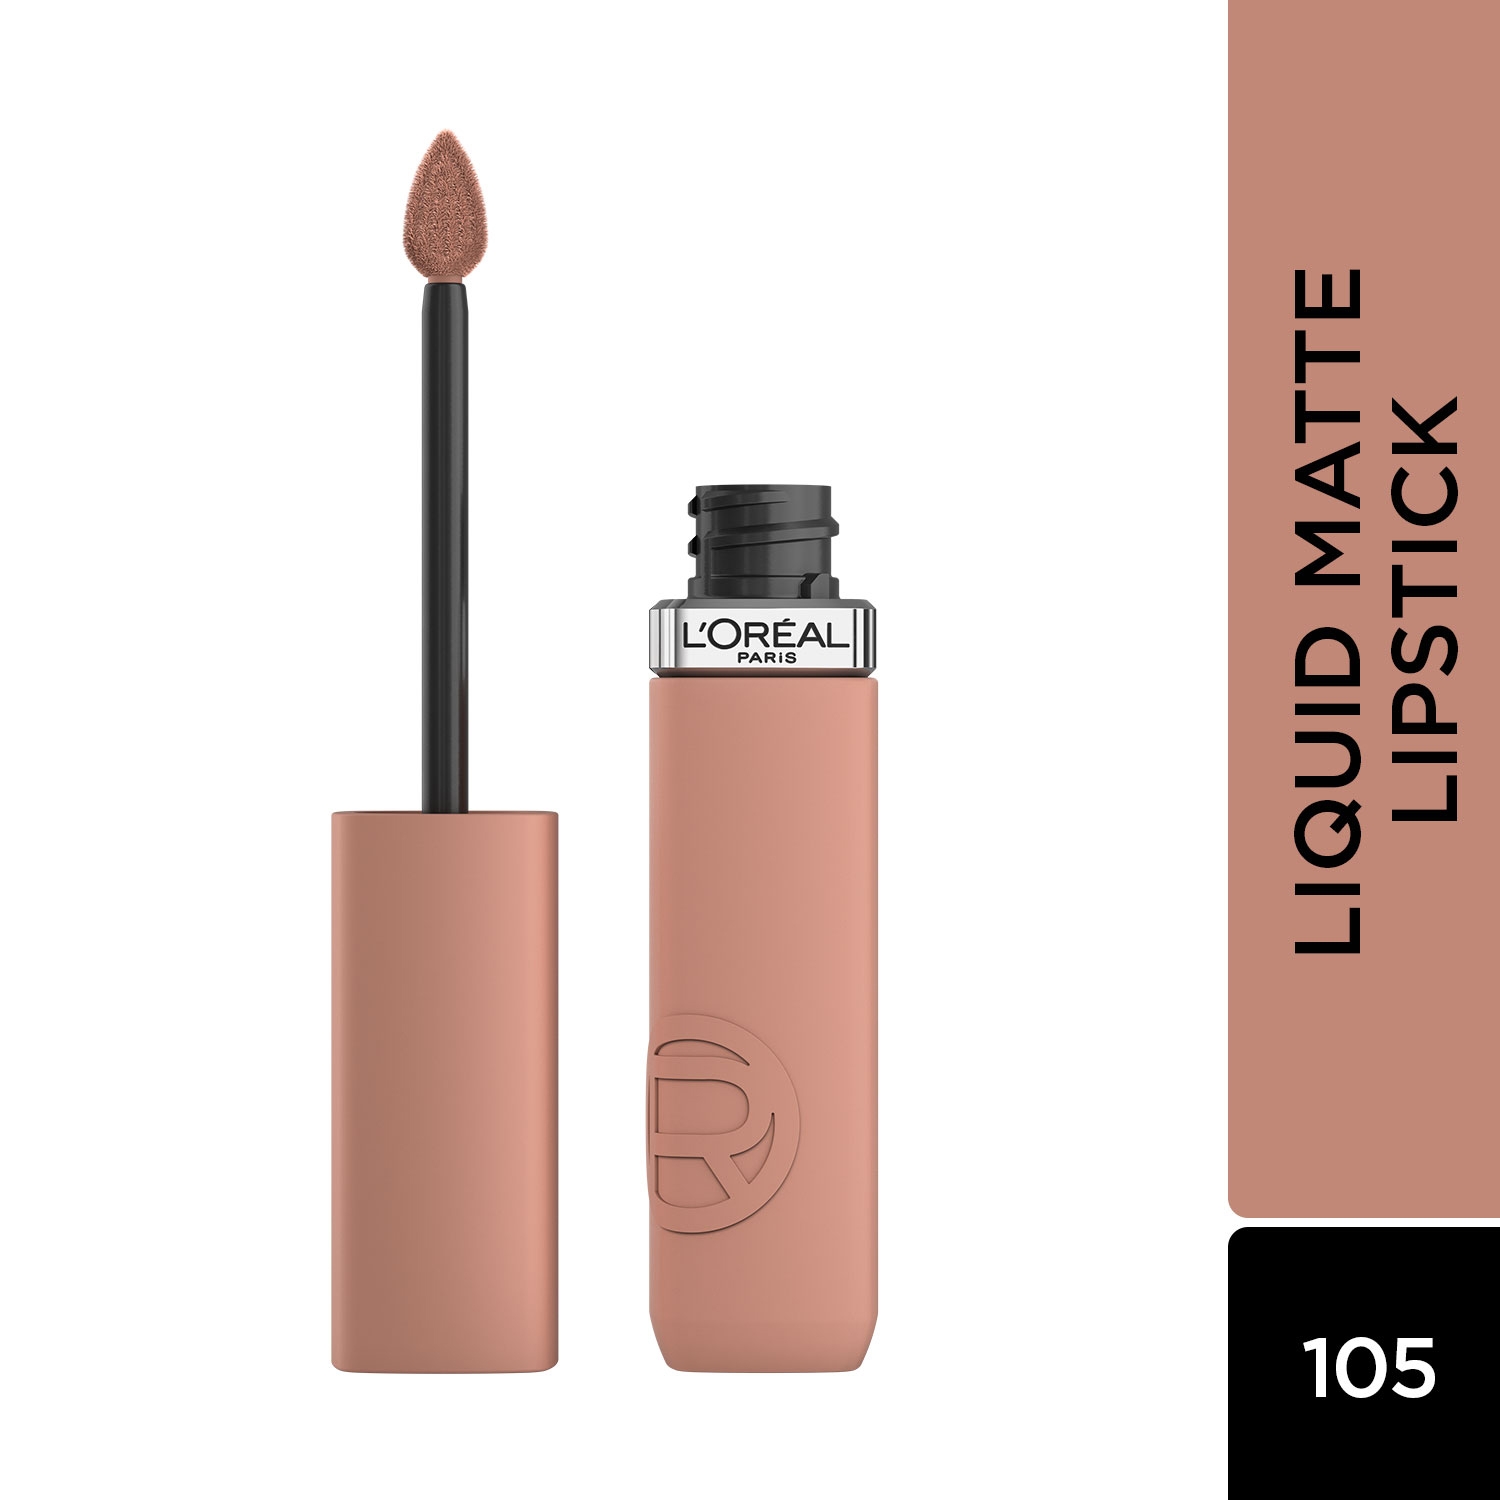 L'Oreal Paris | L'Oreal Paris Infallible Matte Resistance Liquid Lipstick - 105 Breakfast In Bed (5ml)